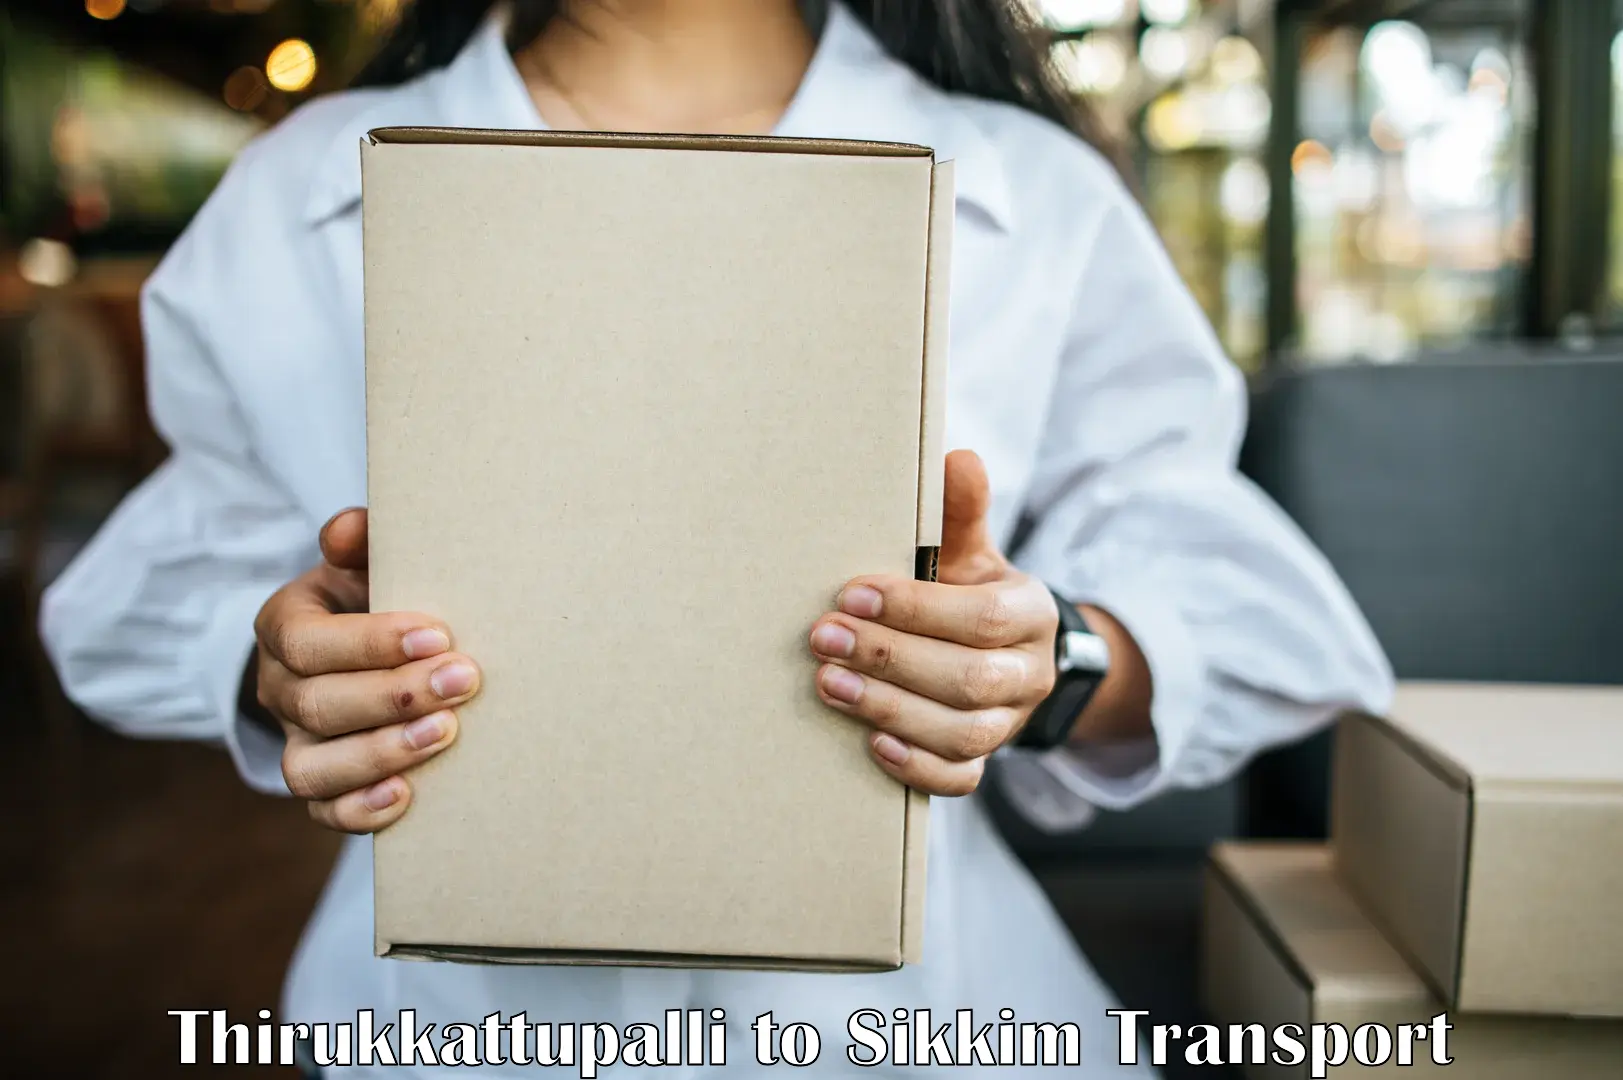 Transport shared services in Thirukkattupalli to Pelling